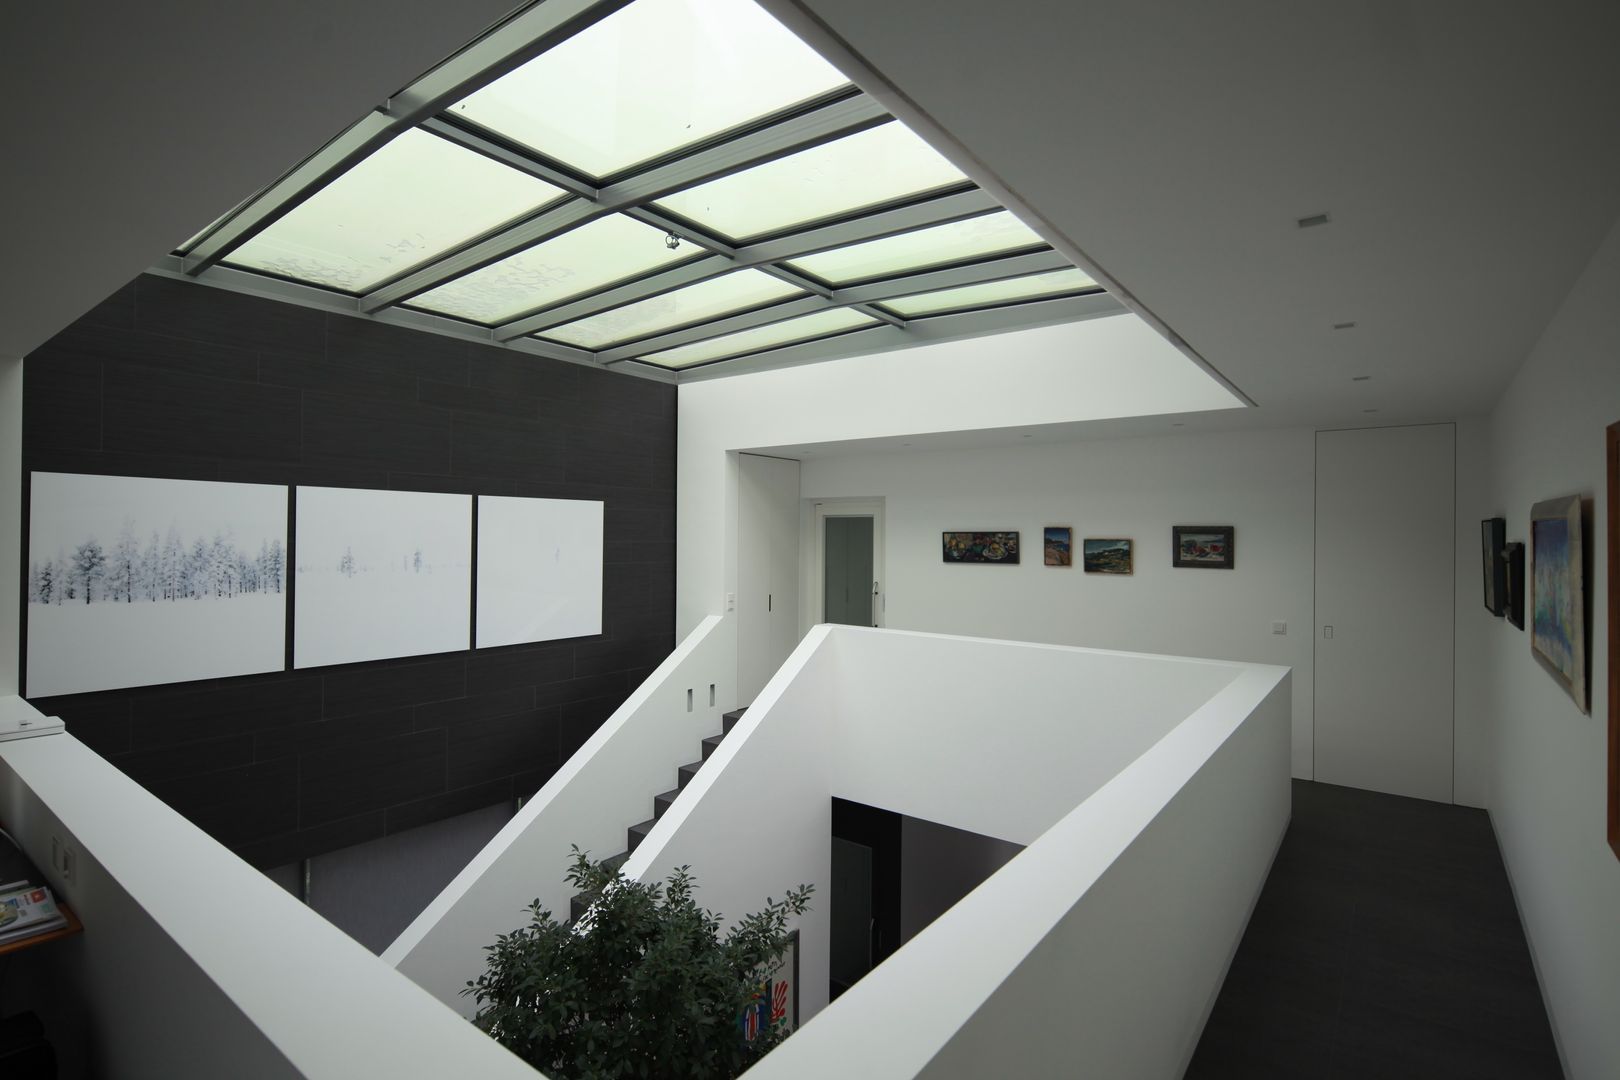 Anwesen in Freising, Herzog-Architektur Herzog-Architektur الممر الحديث، المدخل و الدرج